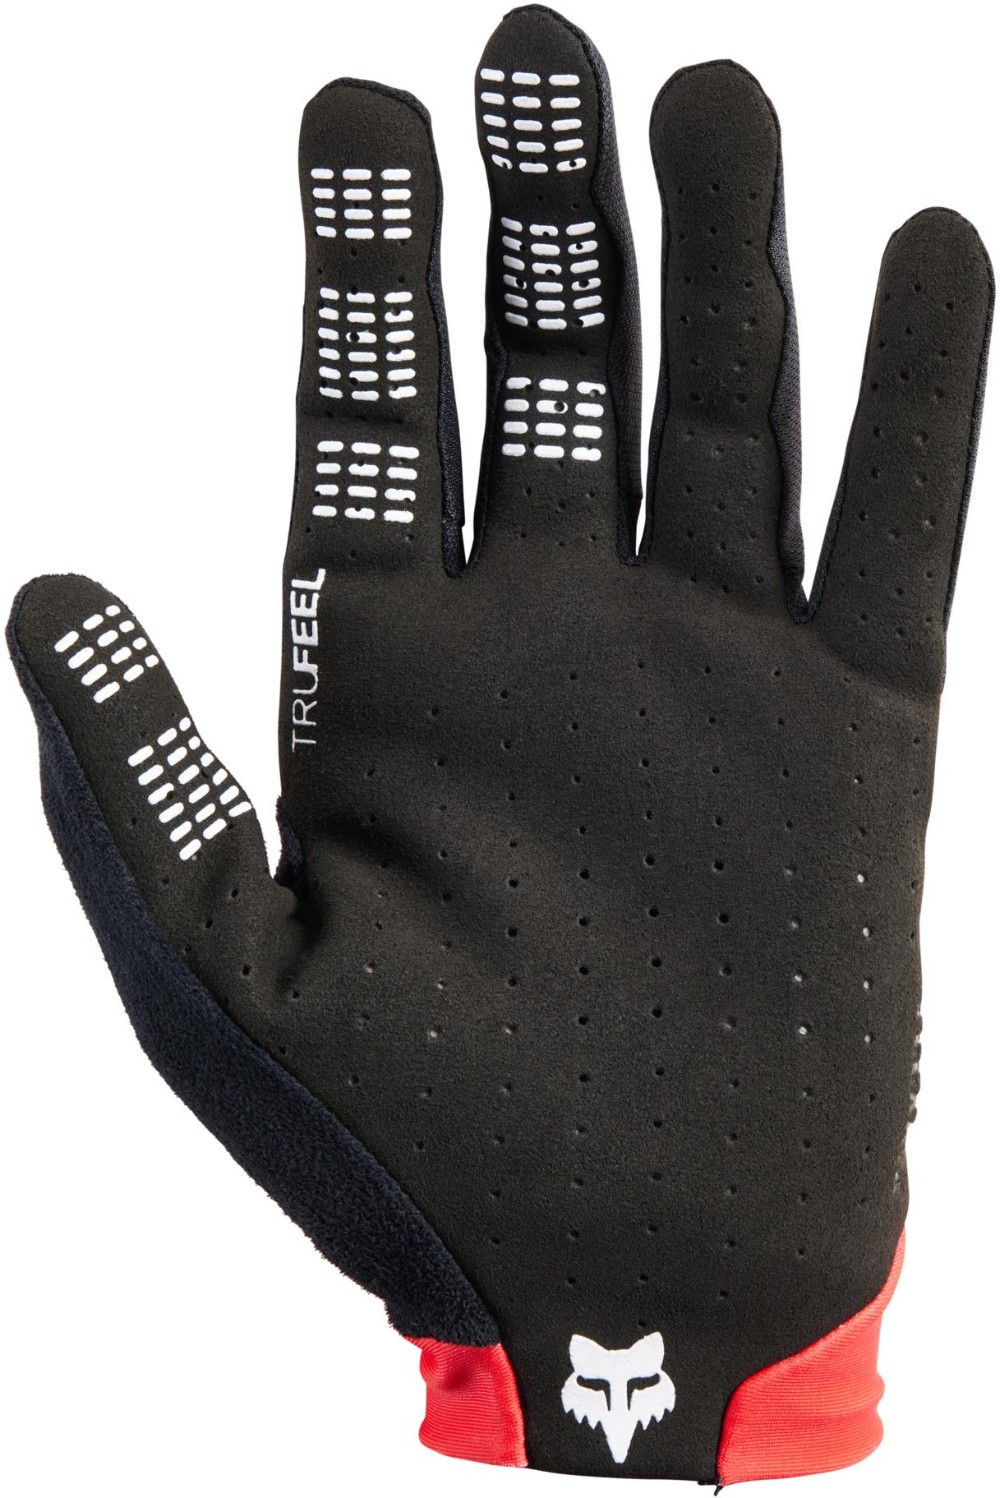 Flexair Race Long Finger Cycling Gloves image 0